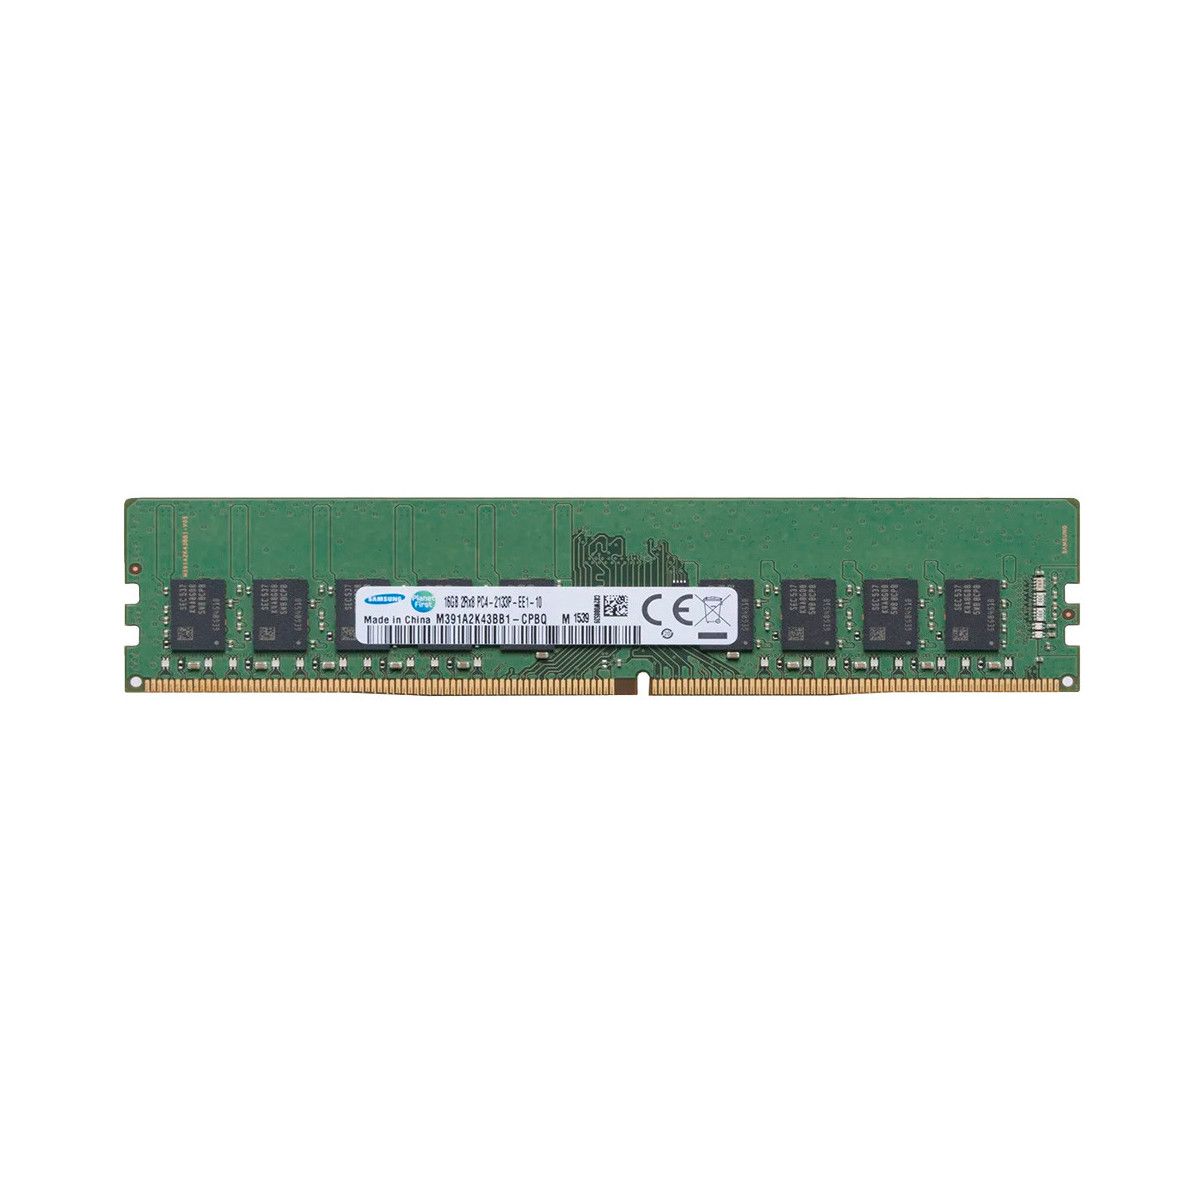 4X70K14185-MS -JA- Memstar 1x 16GB DDR4-2133 ECC UDIMM PC4-17000P-E